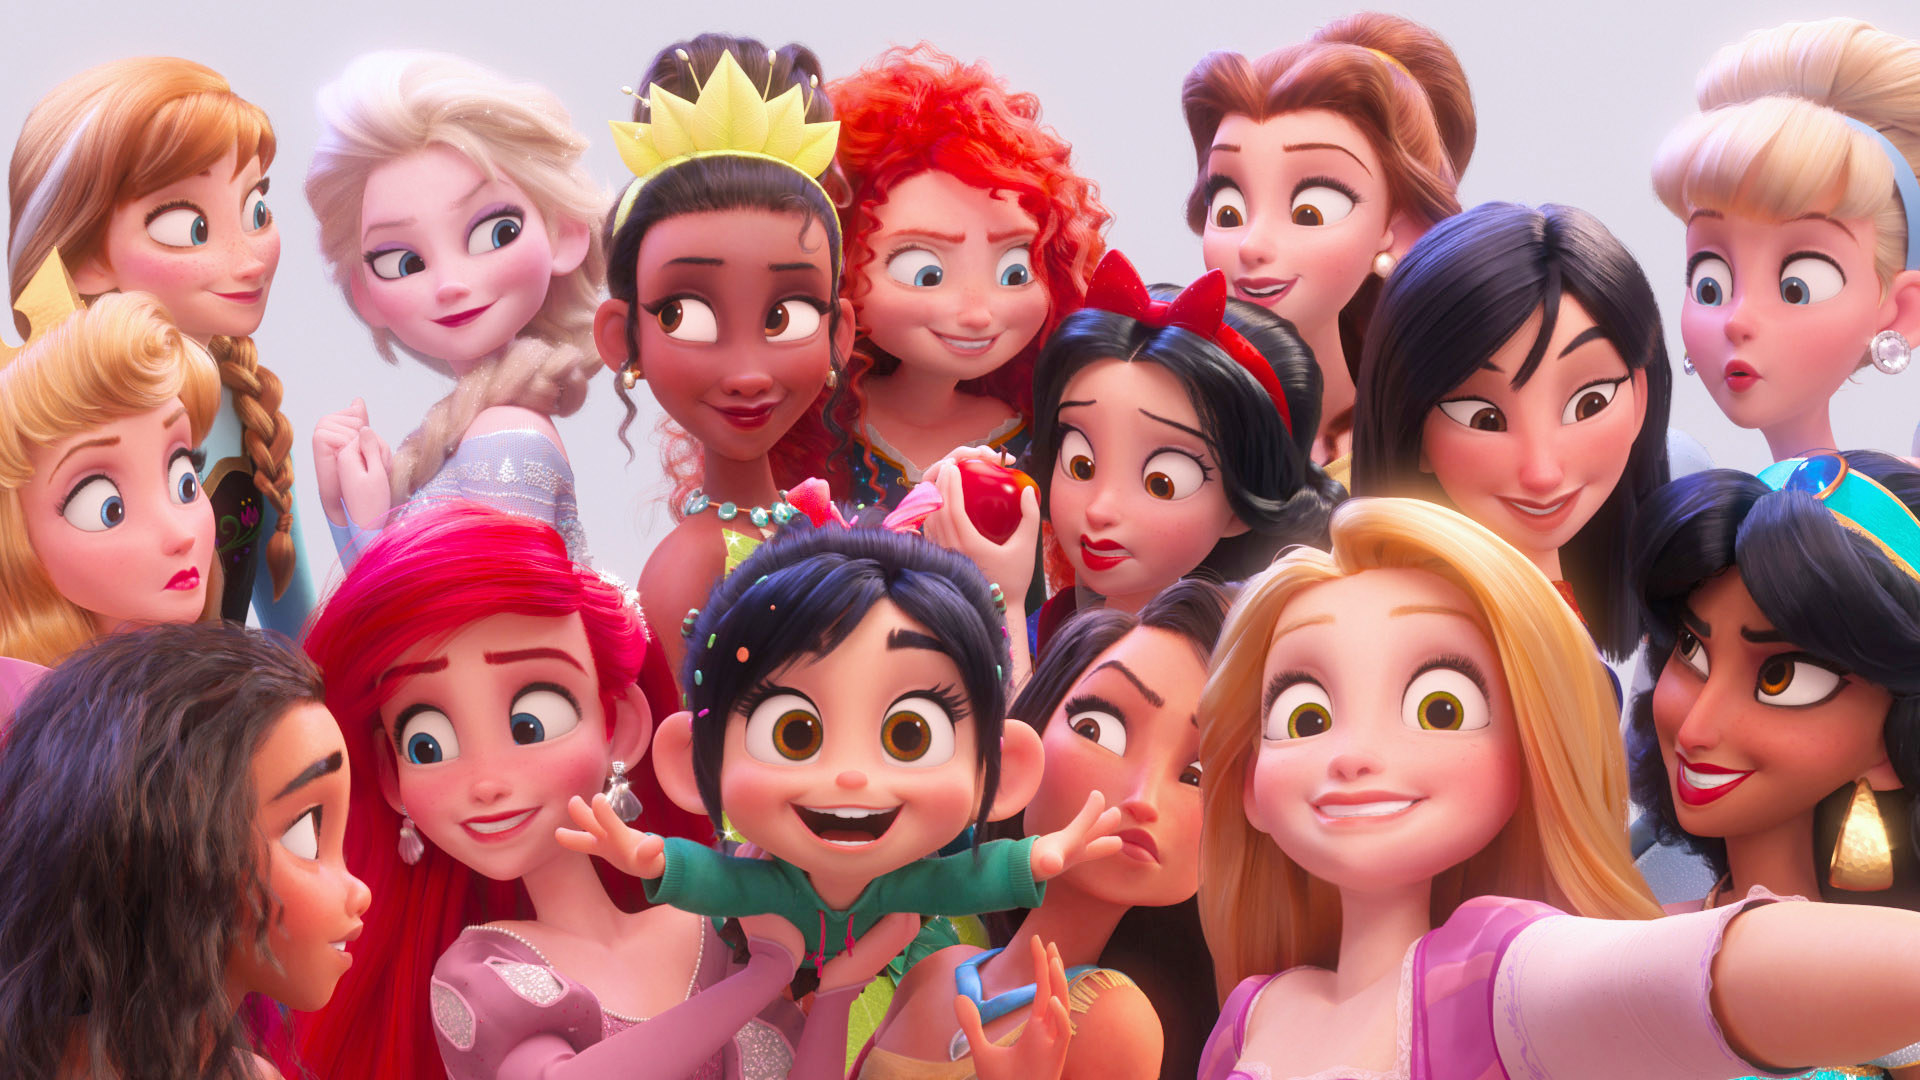 all the Disney princesses in CGI in the film